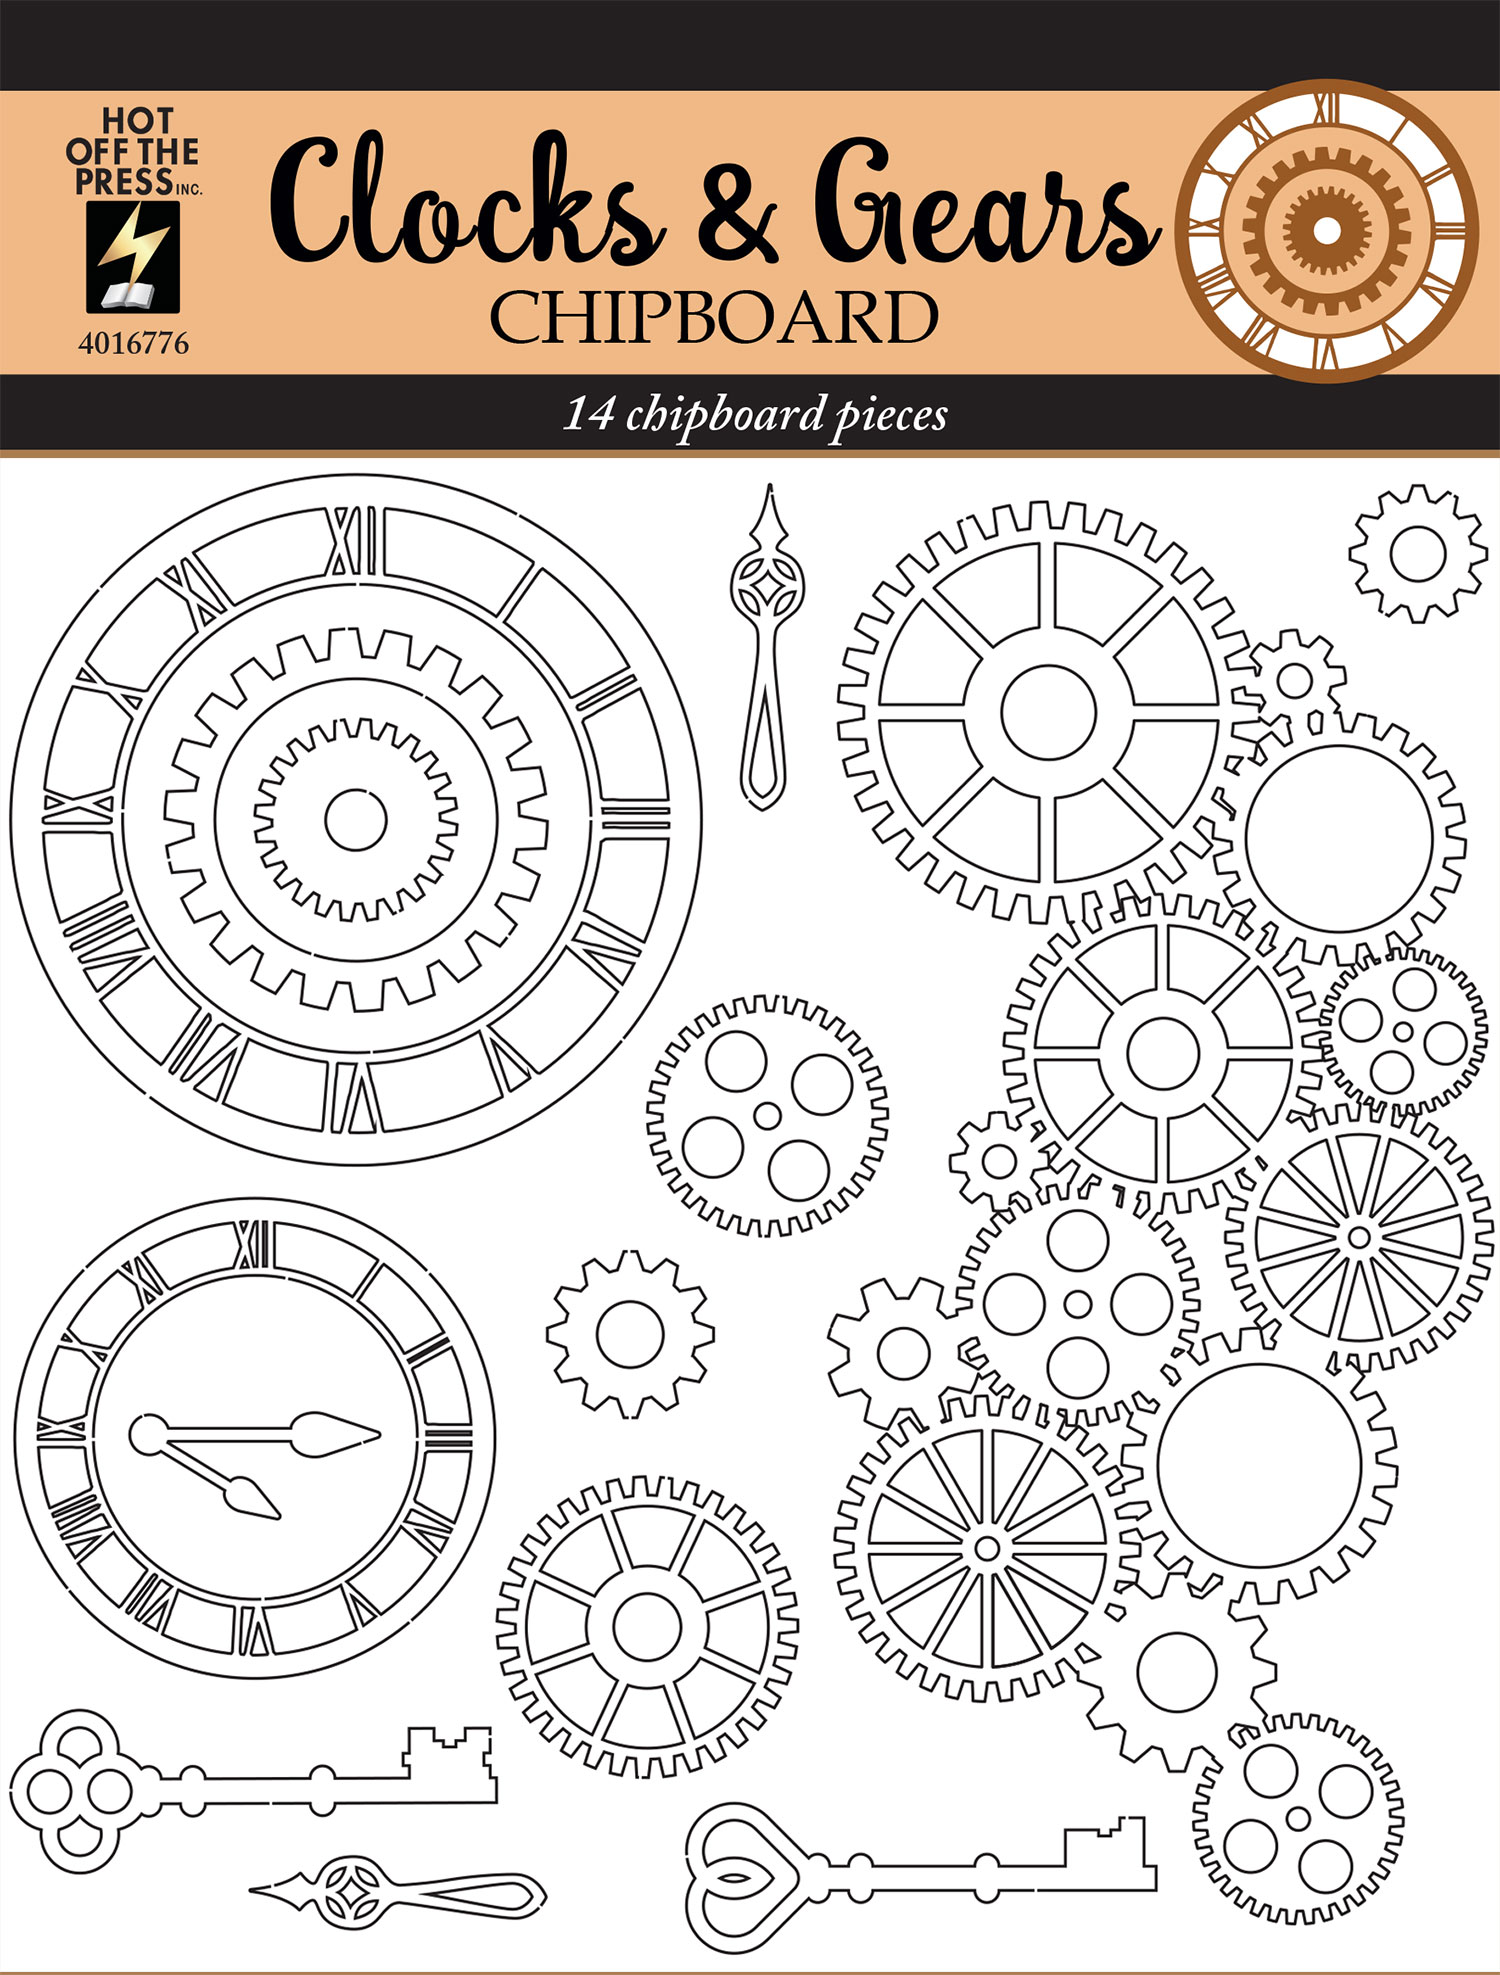 Clocks & Gears Chipboard, 14 pieces